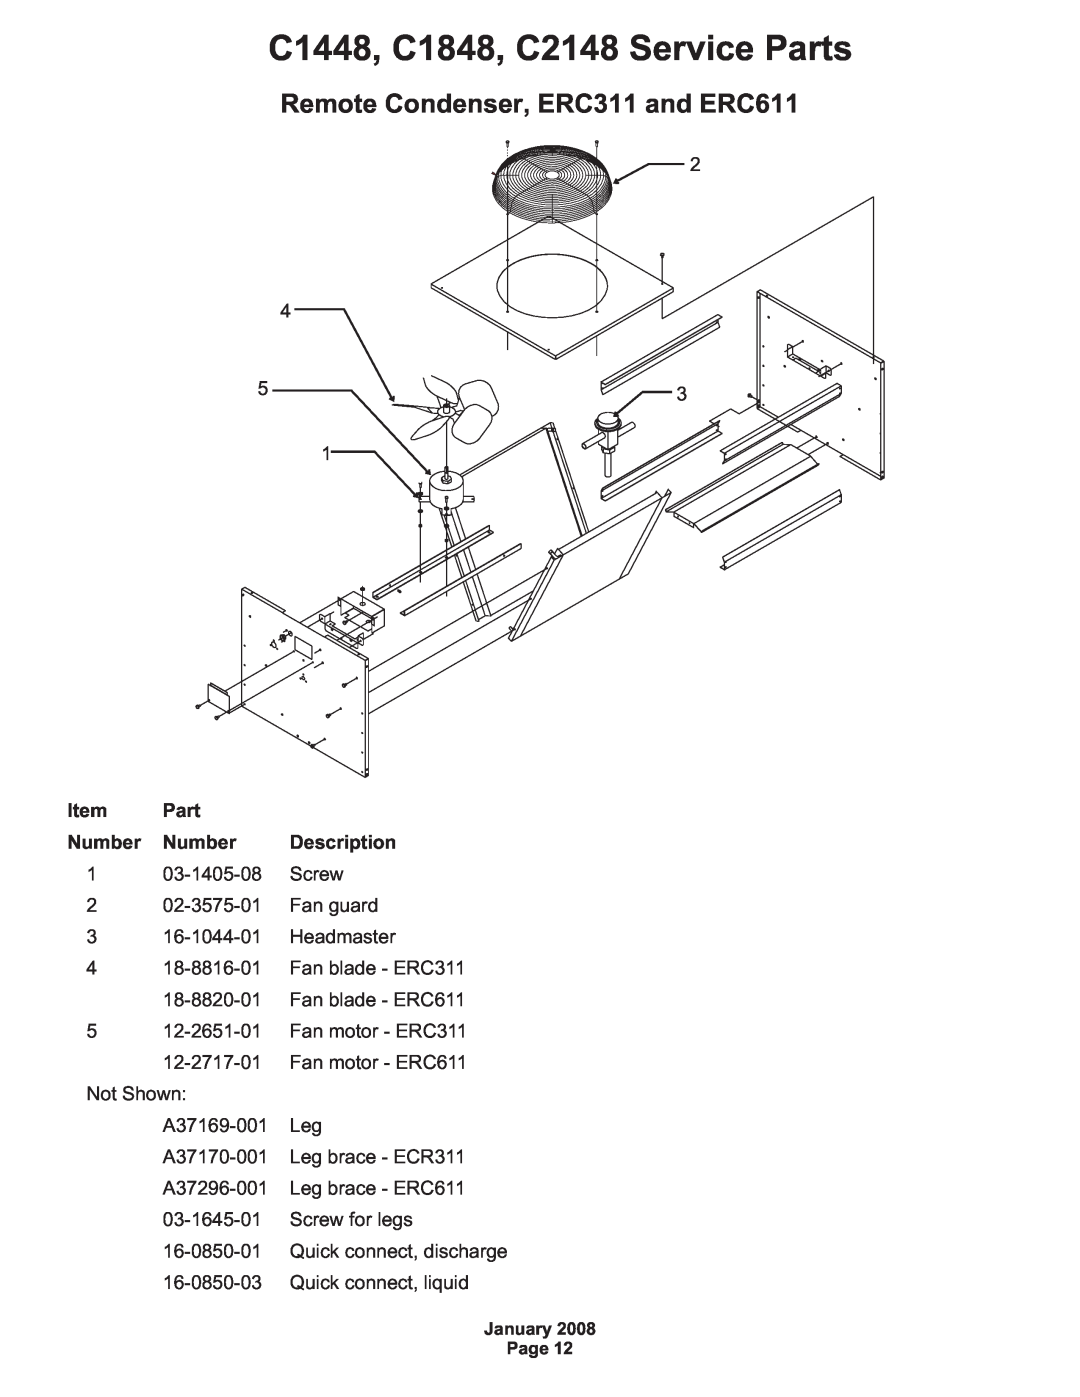 Scotsman Ice manual Remote Condenser, ERC311 and ERC611, C1448, C1848, C2148 Service Parts, Number 